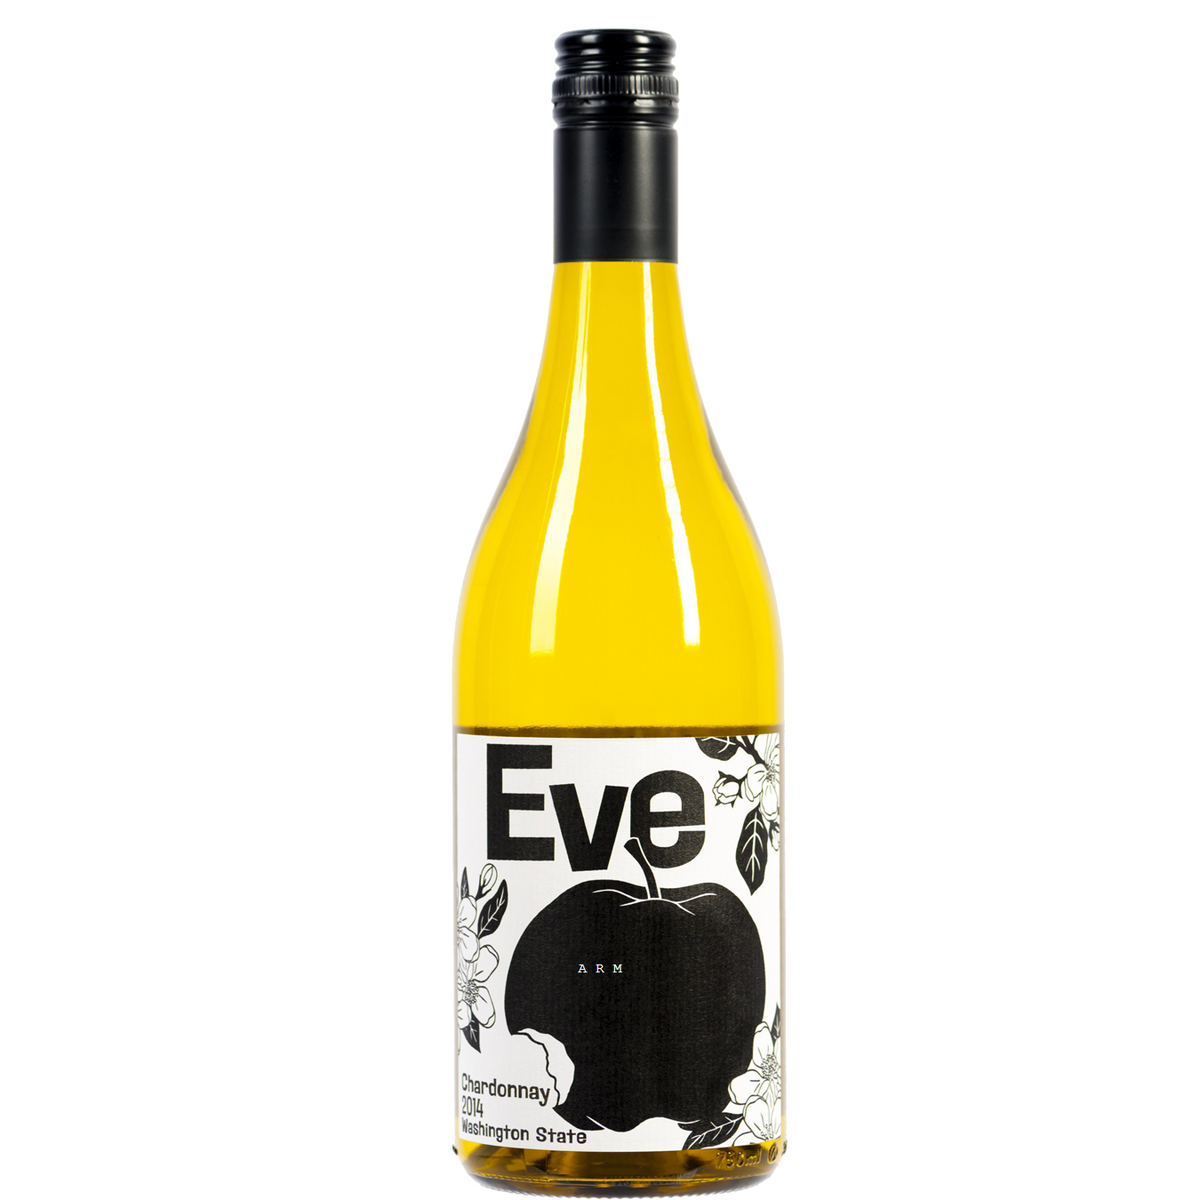 Eve Eve Chardonnay Chardonnay